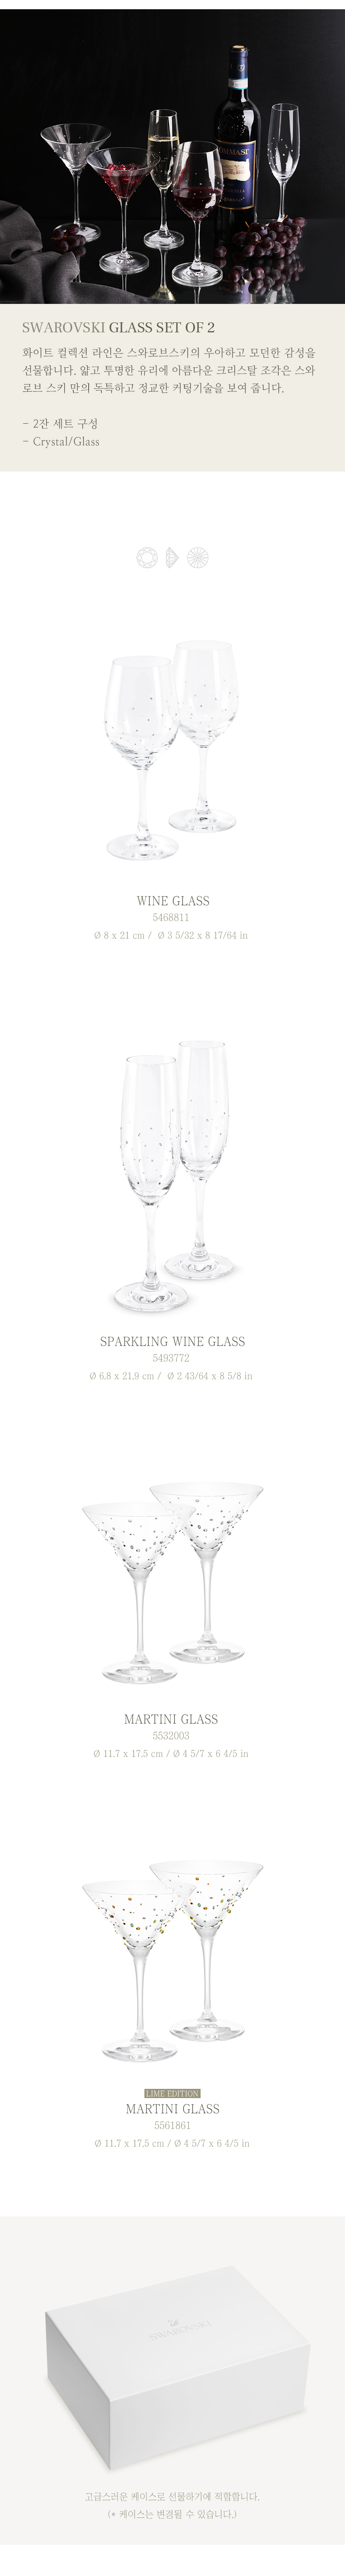 Swarovski Crystal Wine Glasses, Set of 2 - 5468811